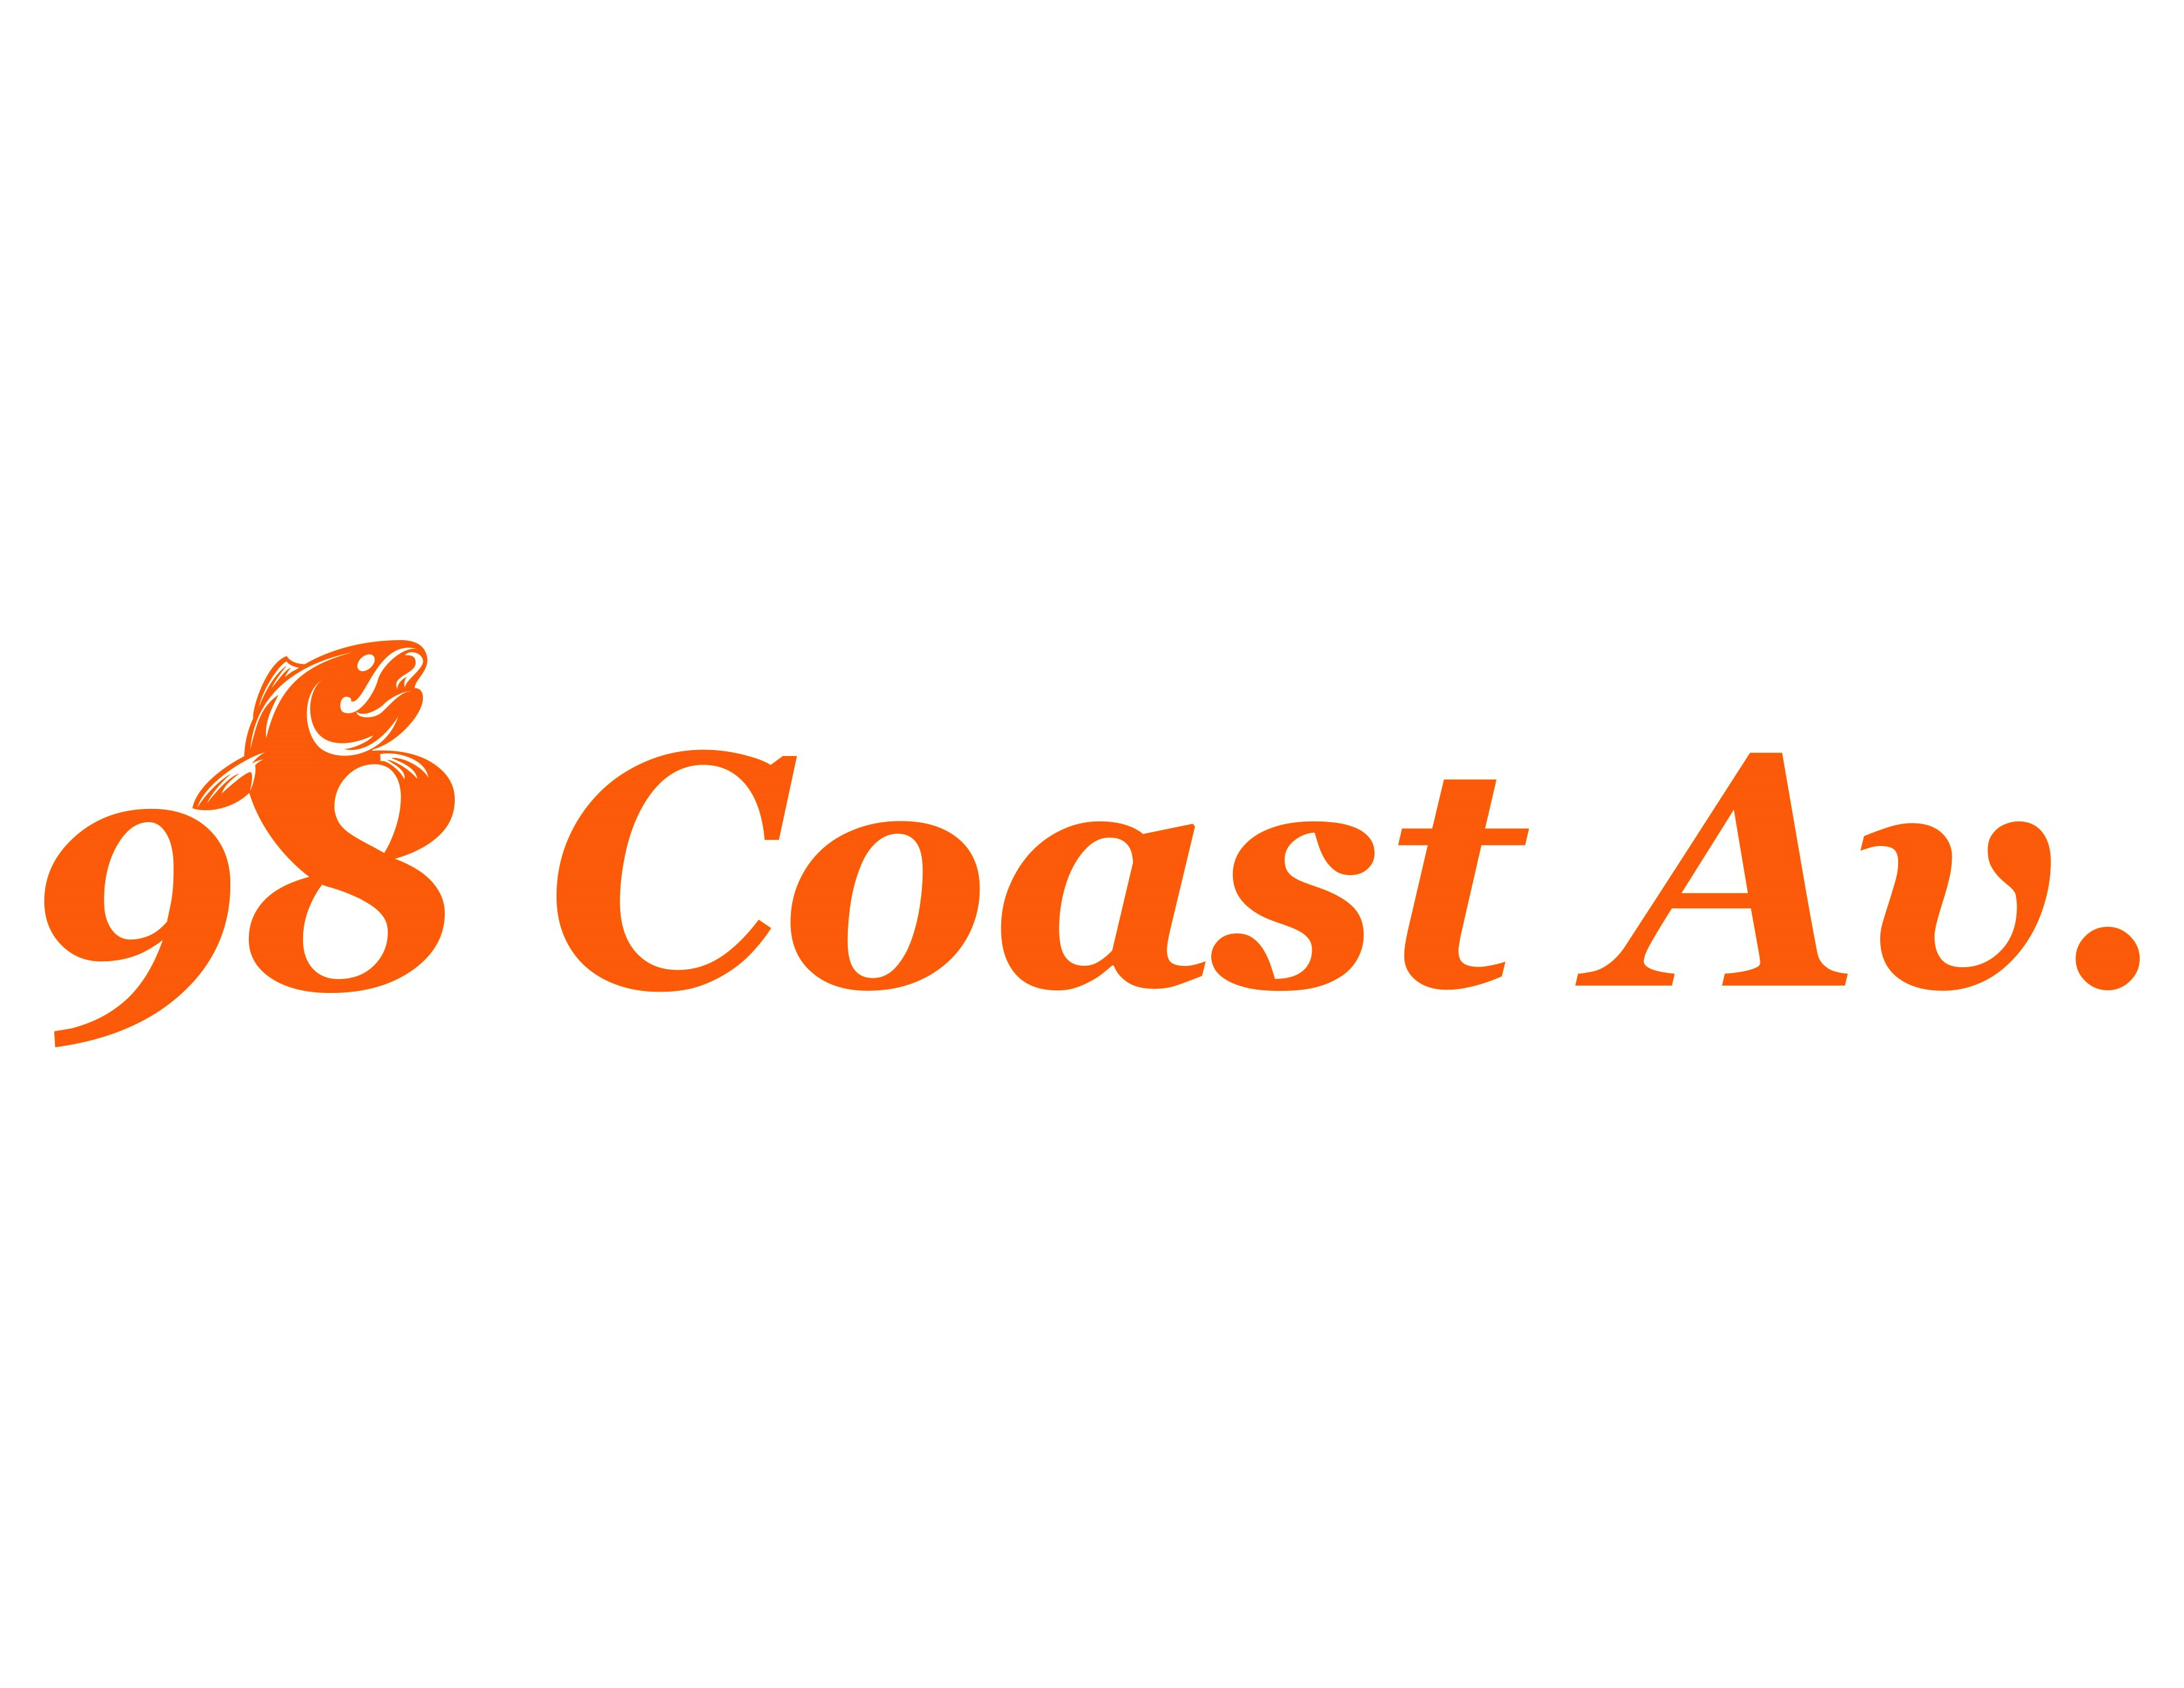 logo_98 coast av